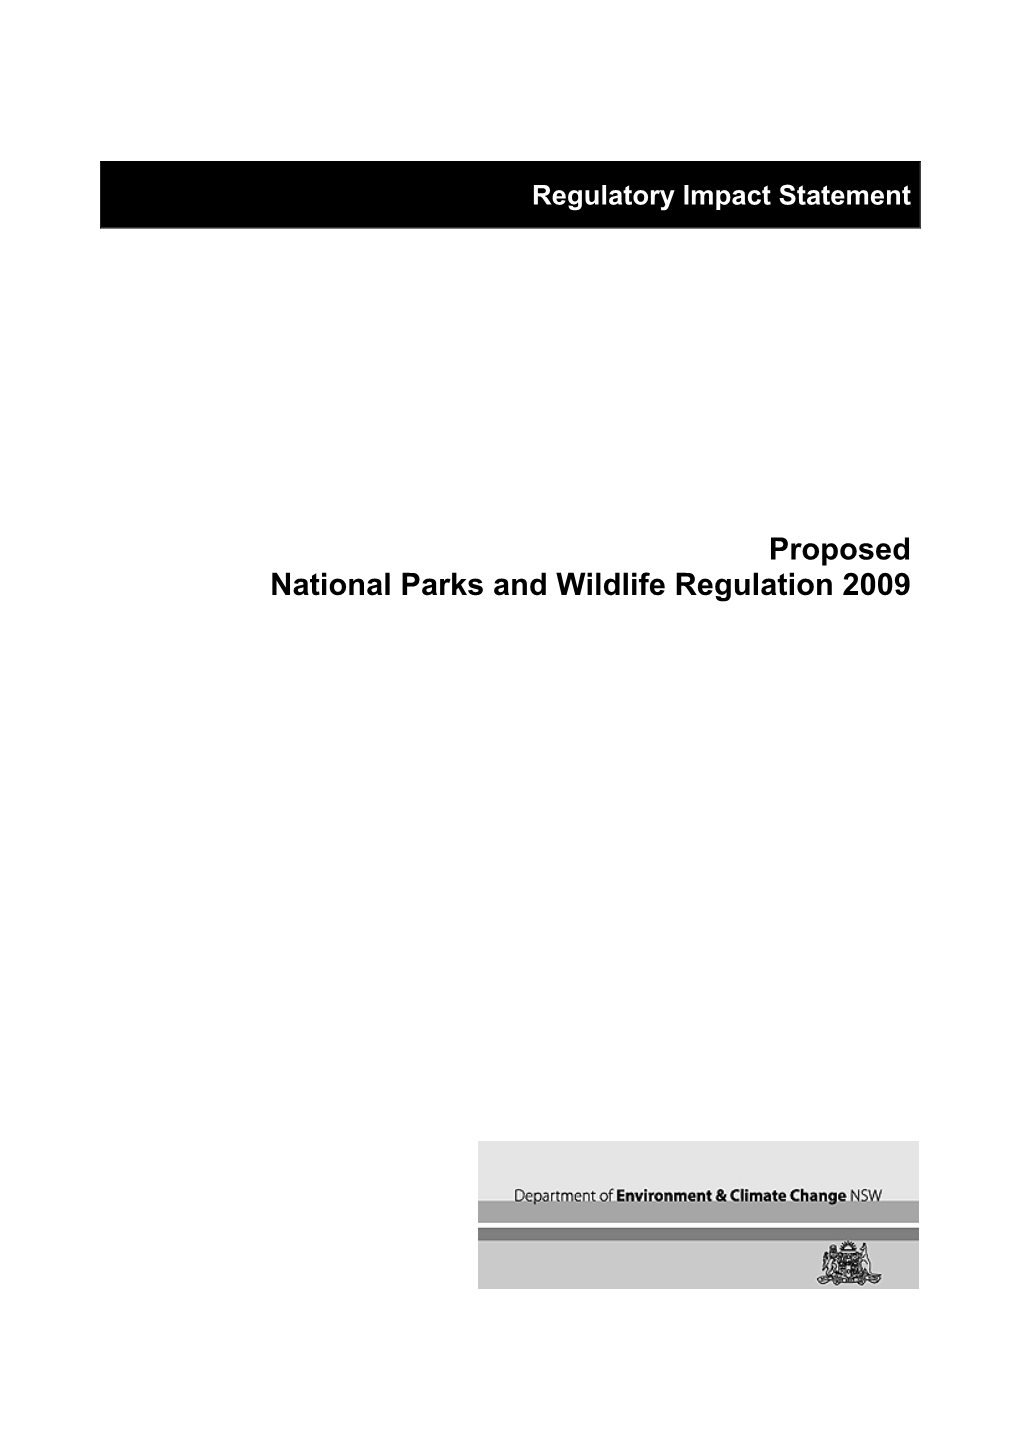 Proposed National Parks and Wildlife Regulation 2009, Regulatory Impact Statement